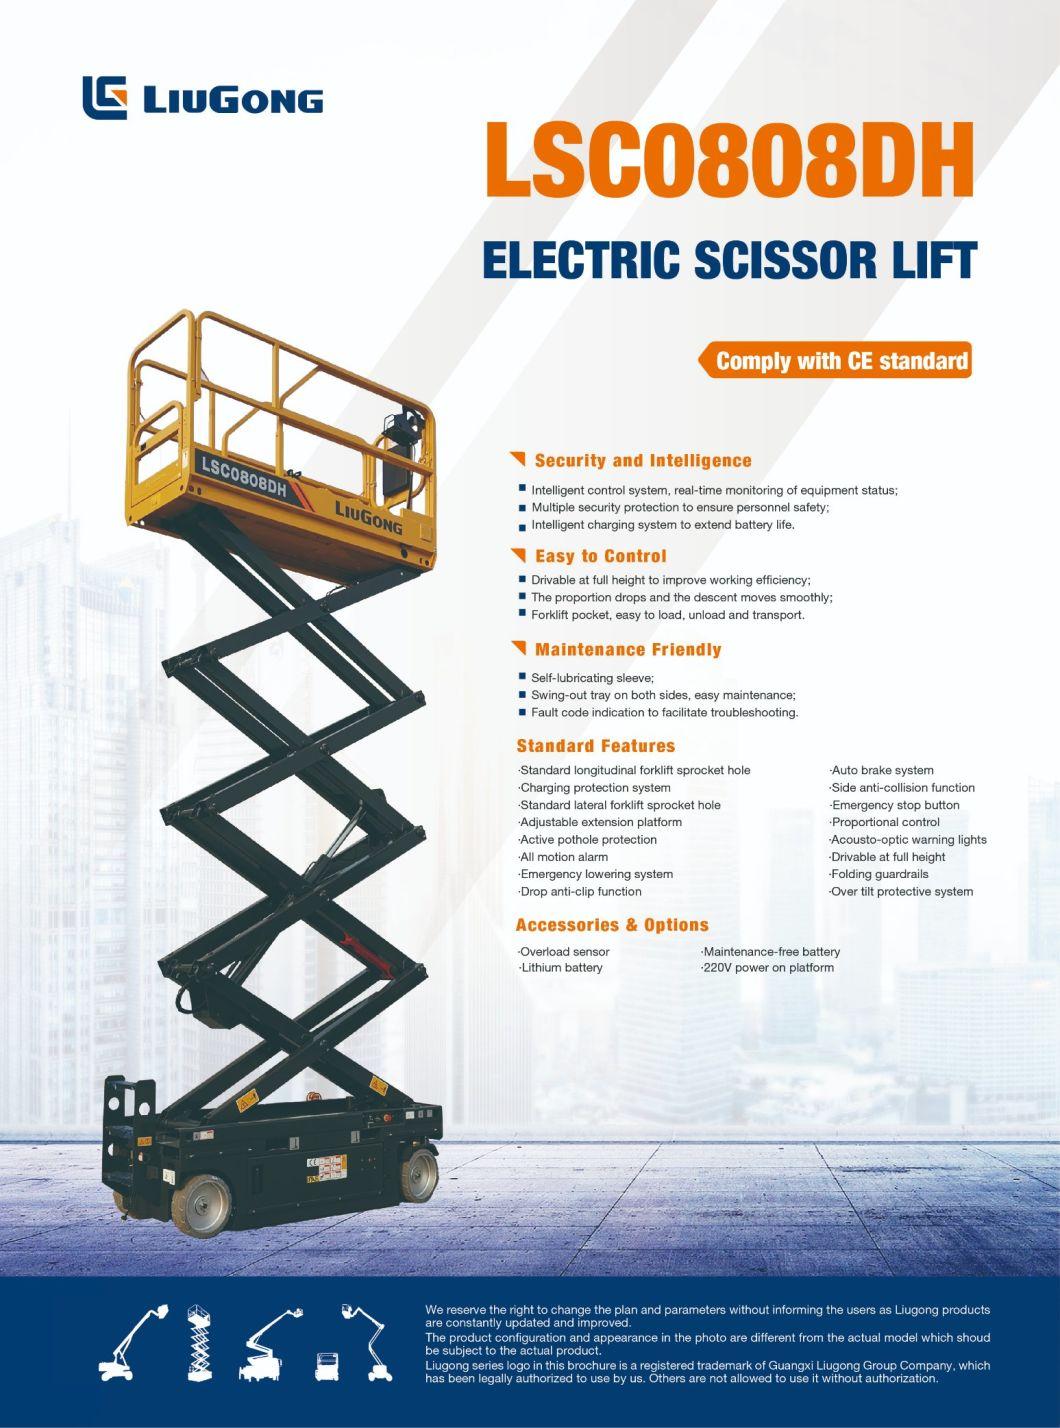 LiuGong MEWP LSC0808DH Electric Sicssor Lift 8m